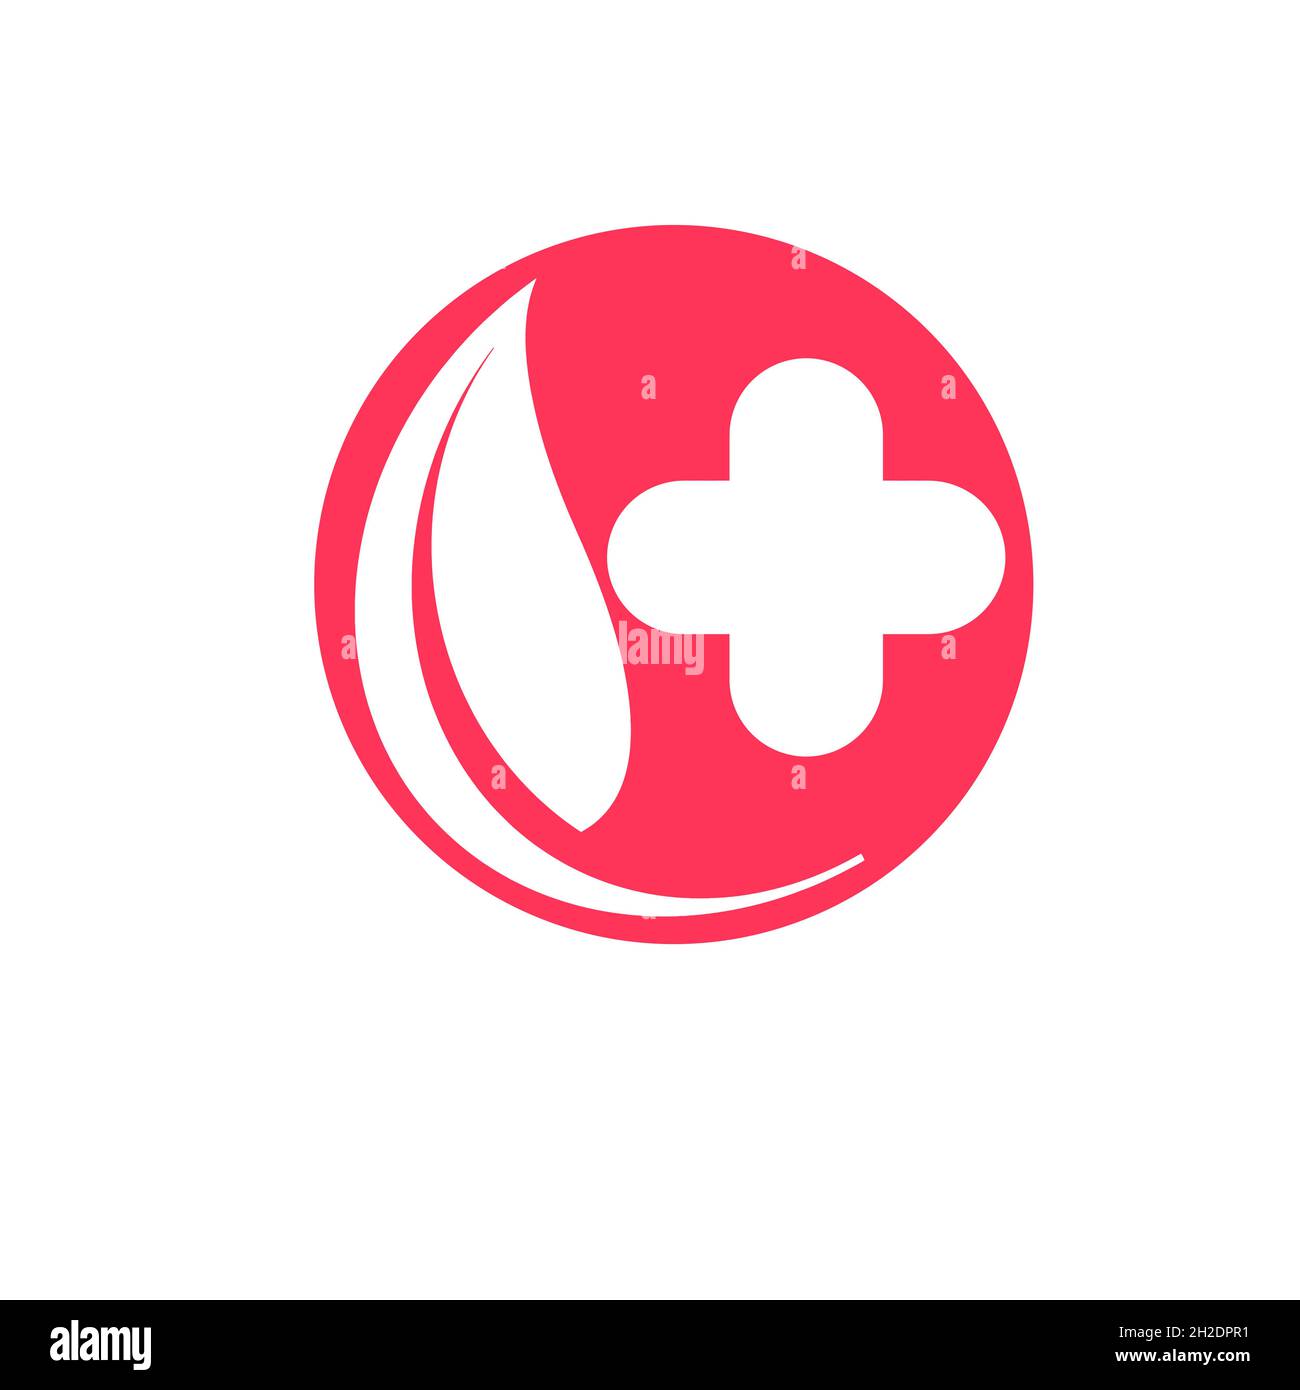 Pharmacy doctor medical health care clinic hospital logo and symbols Stock Vector